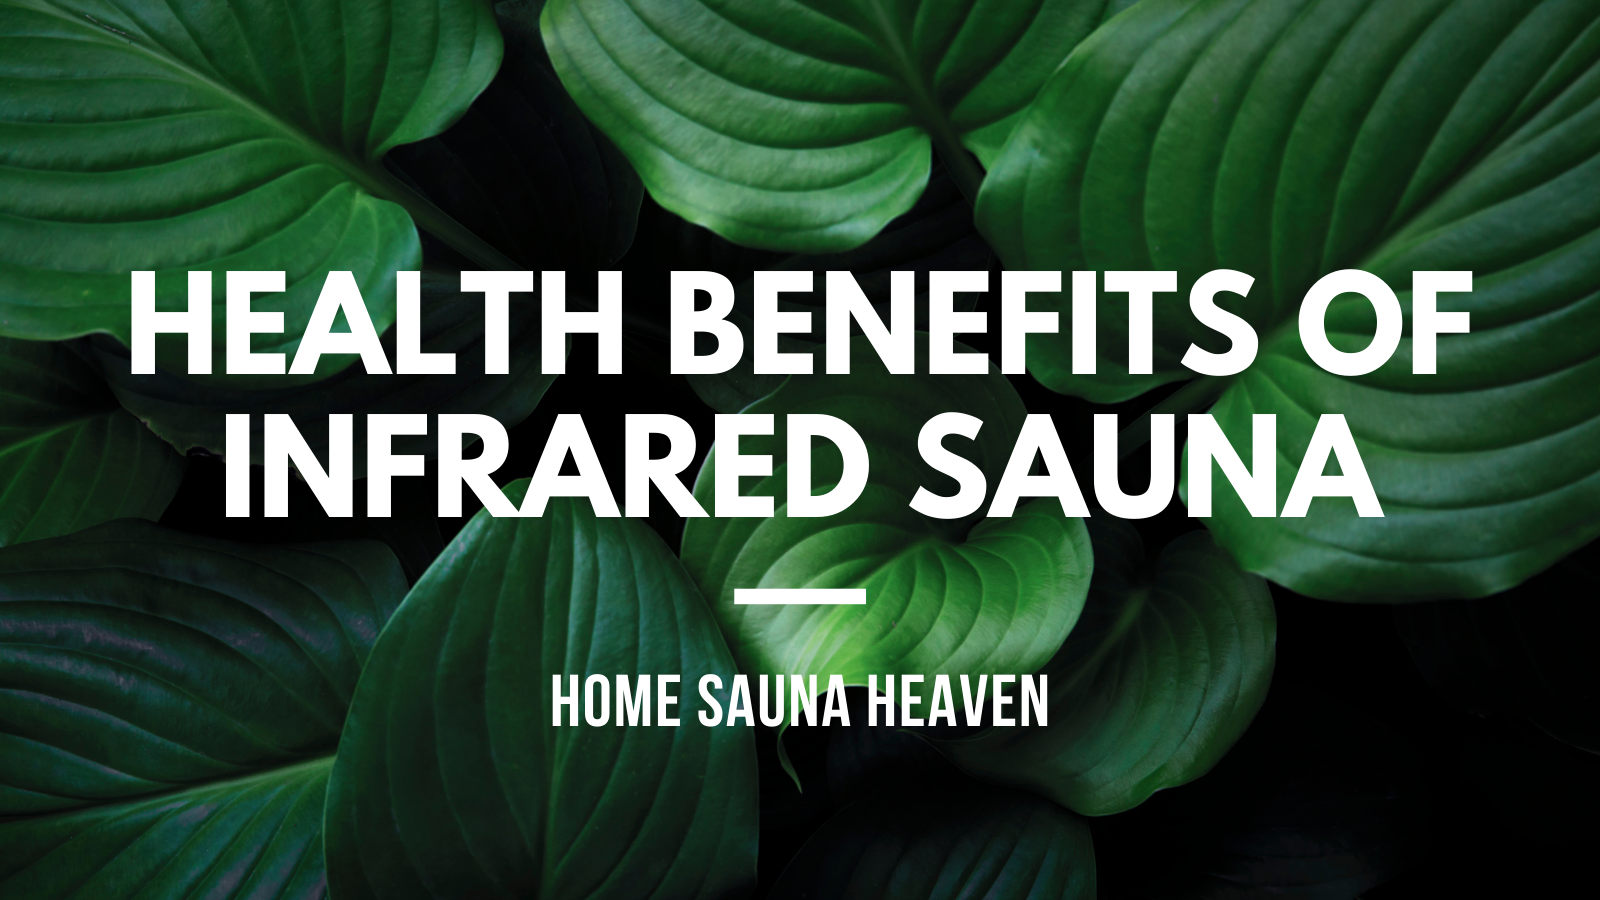 Health Benefits of Infrared Sauna - Heal Body & Relax Mind